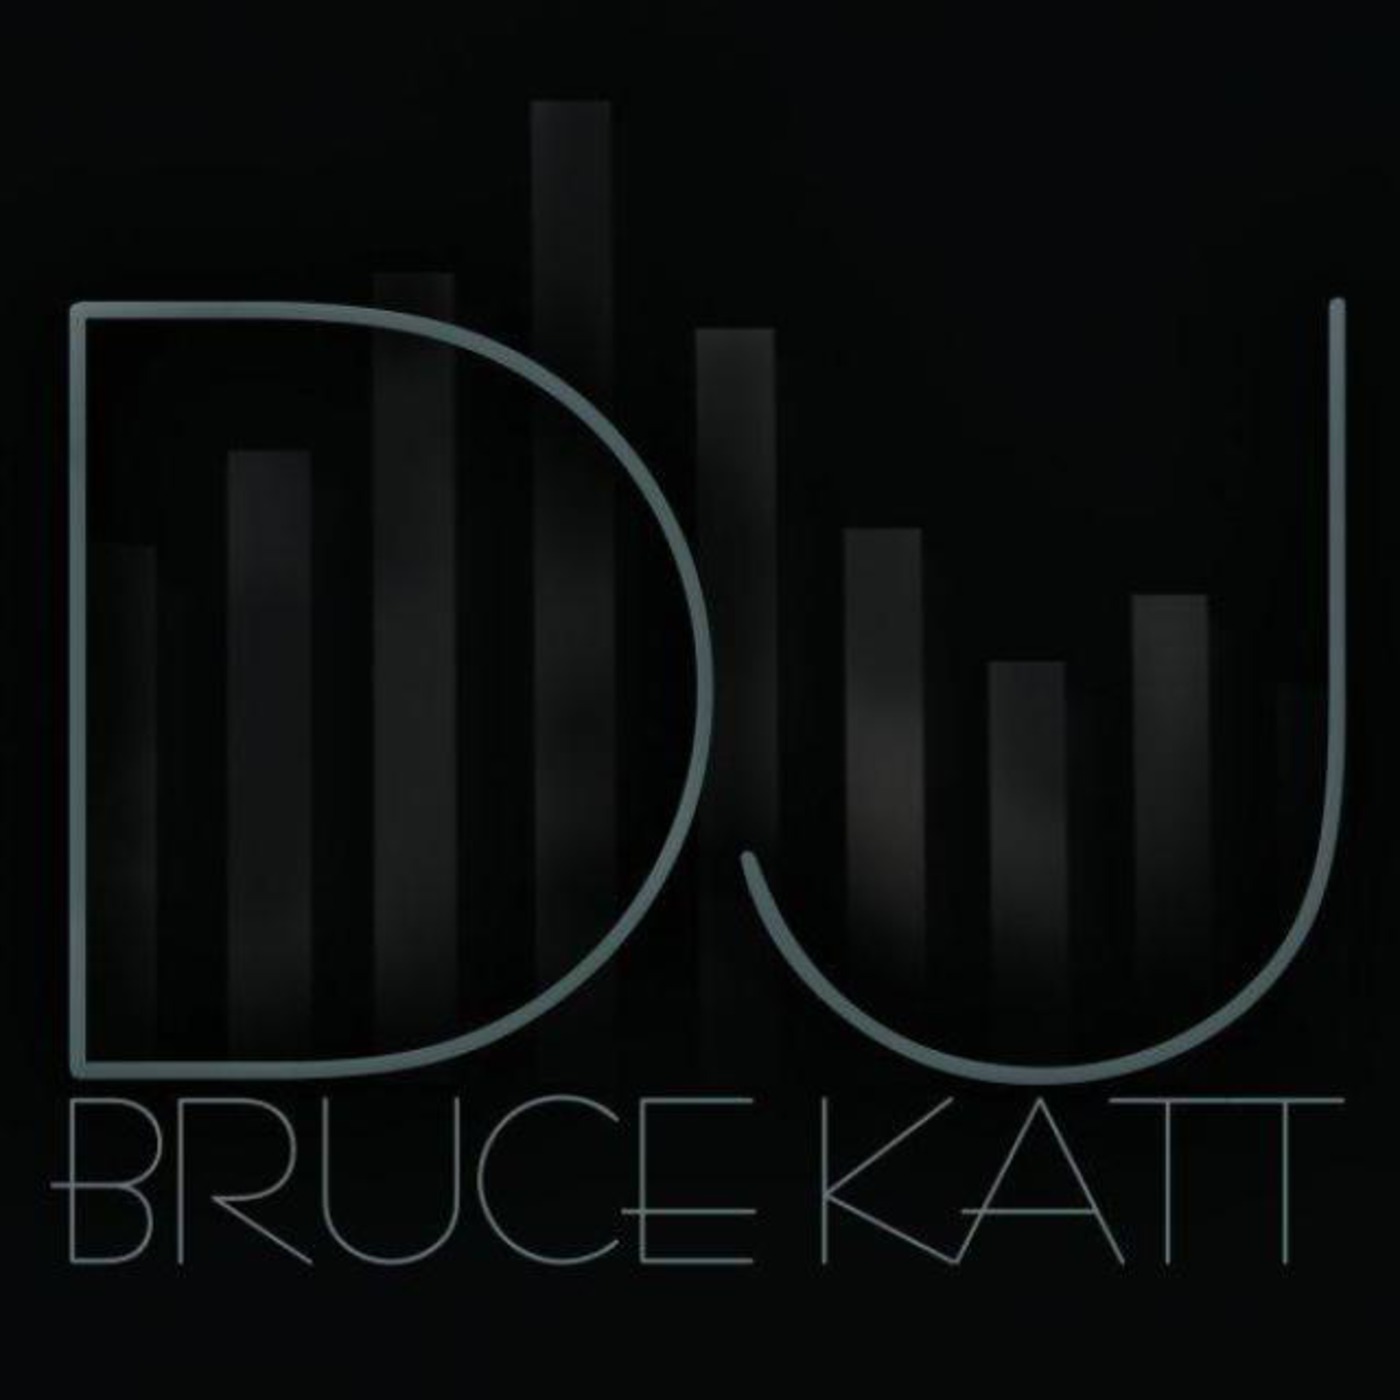 DJ Bruce Katt's Podcast